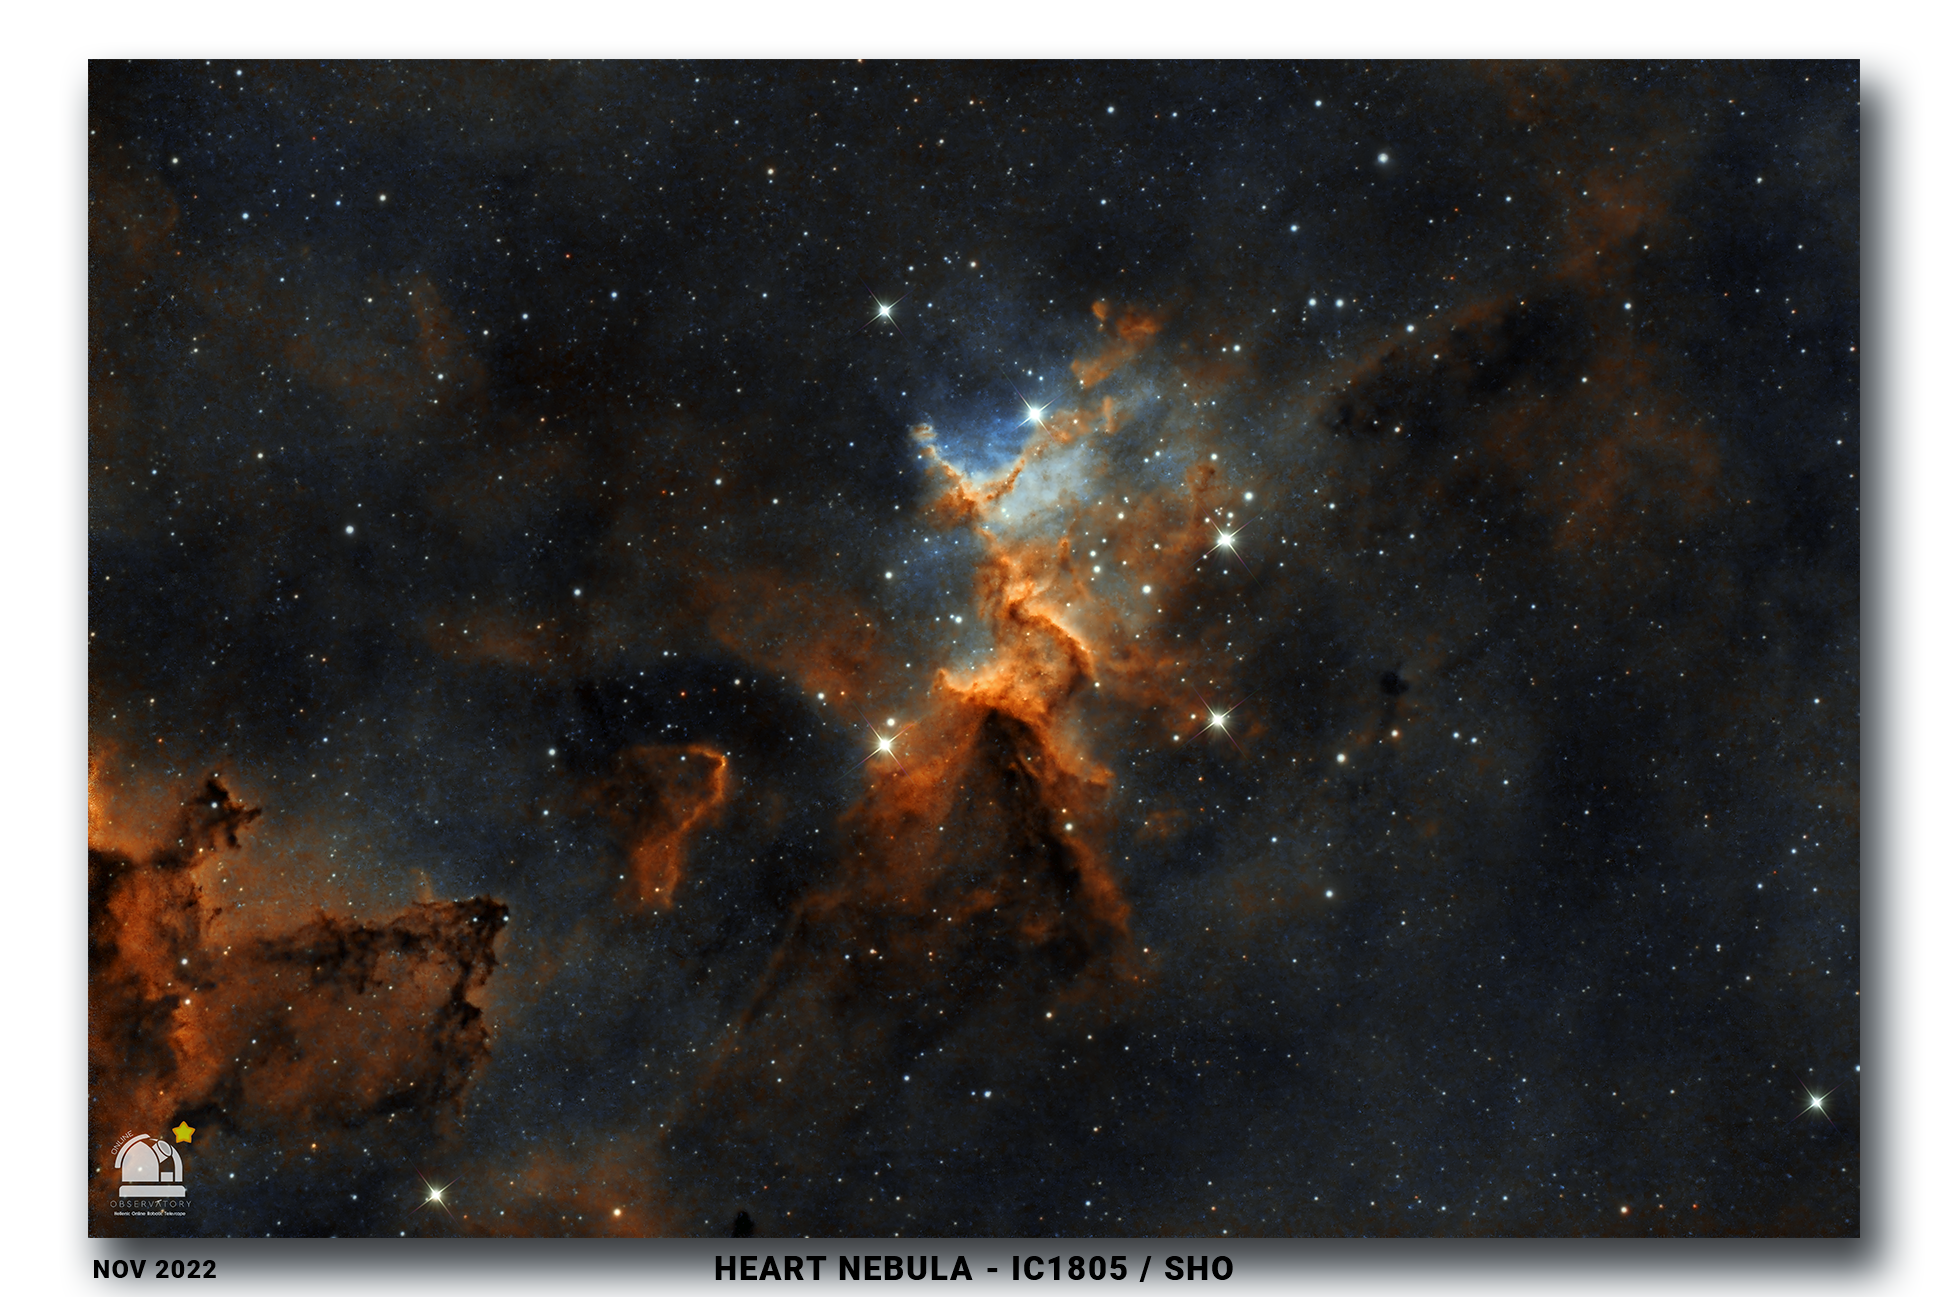 HEART NEBULA - IC1804 / SHO